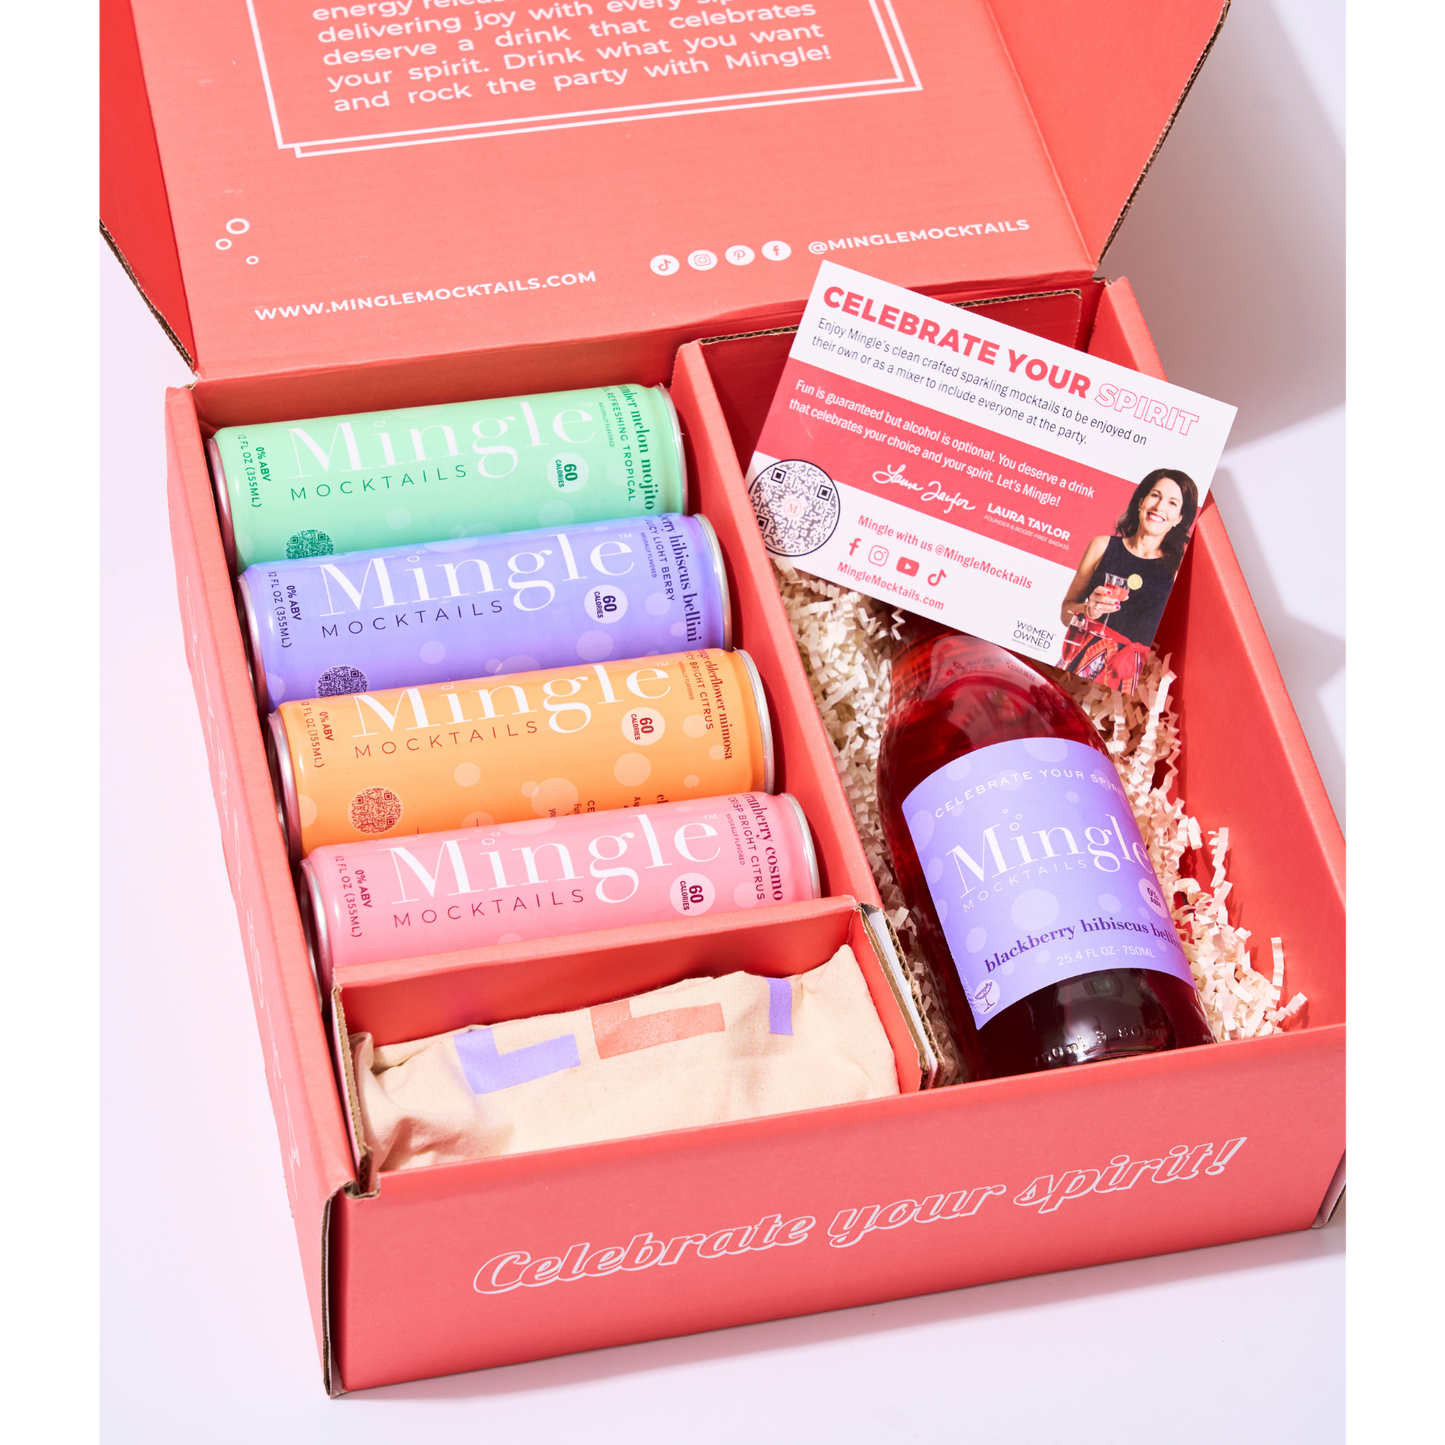 Mingle Mocktails - Gift Boxes: Signature Cans Gift Box / Signature Bottle Gift Box